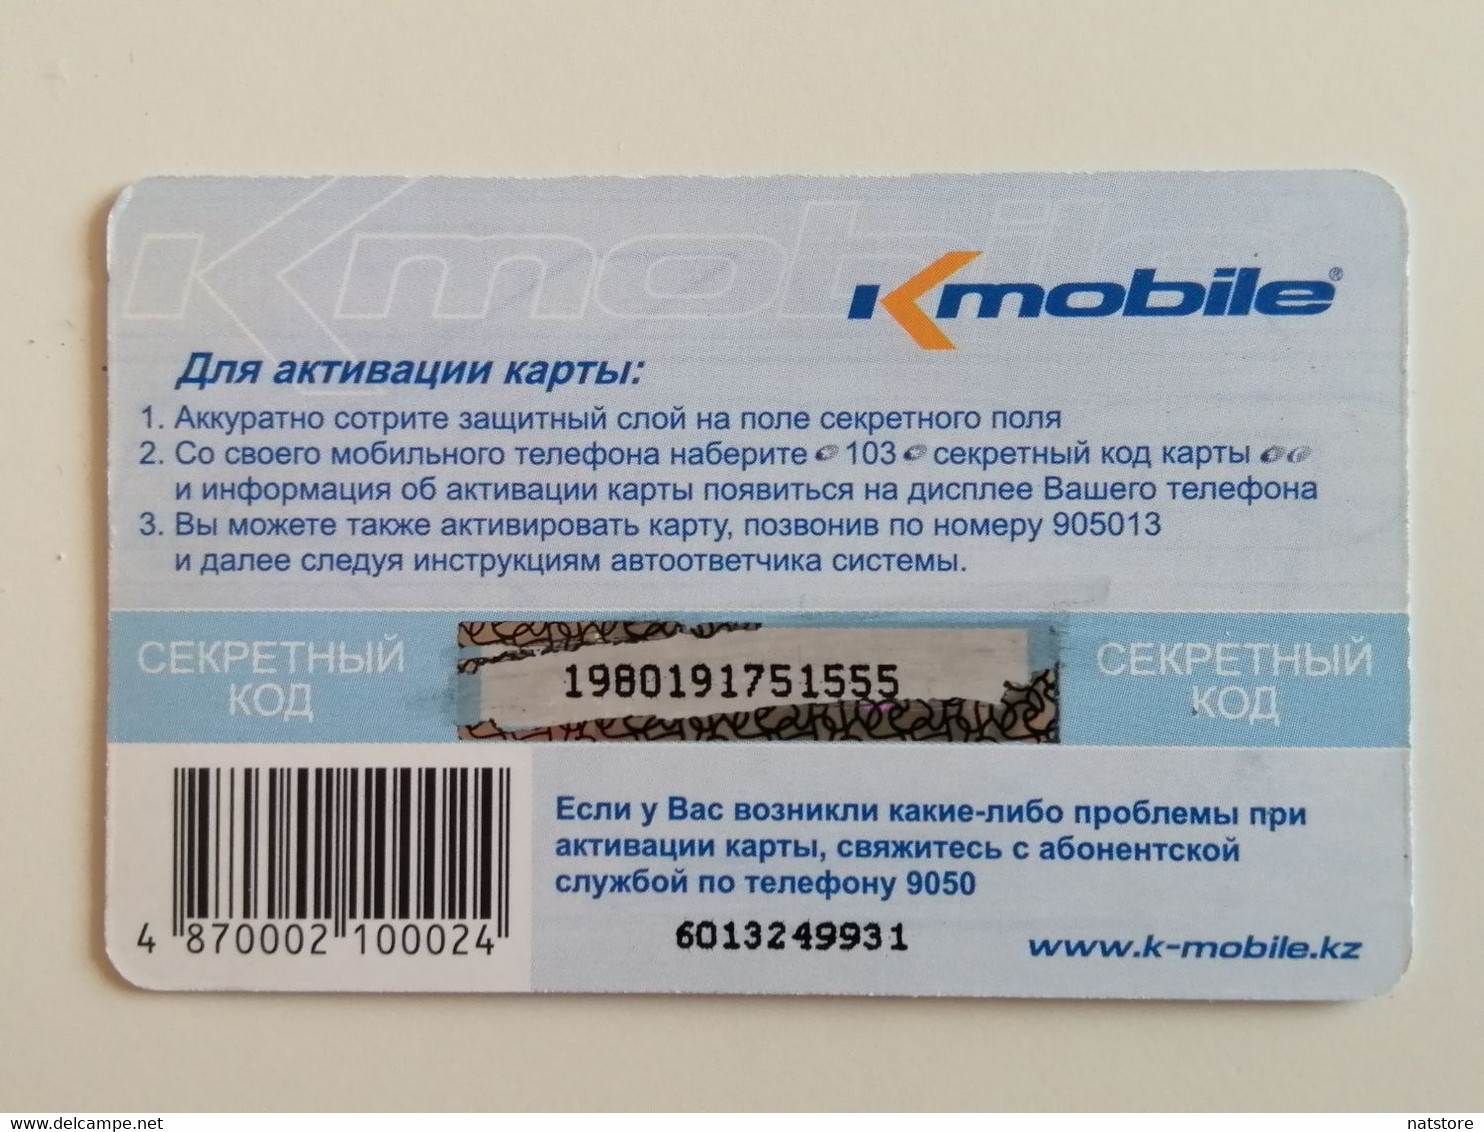 KAZAKHSTAN..PHONECARD..K-MOBILE...1000 - Opérateurs Télécom